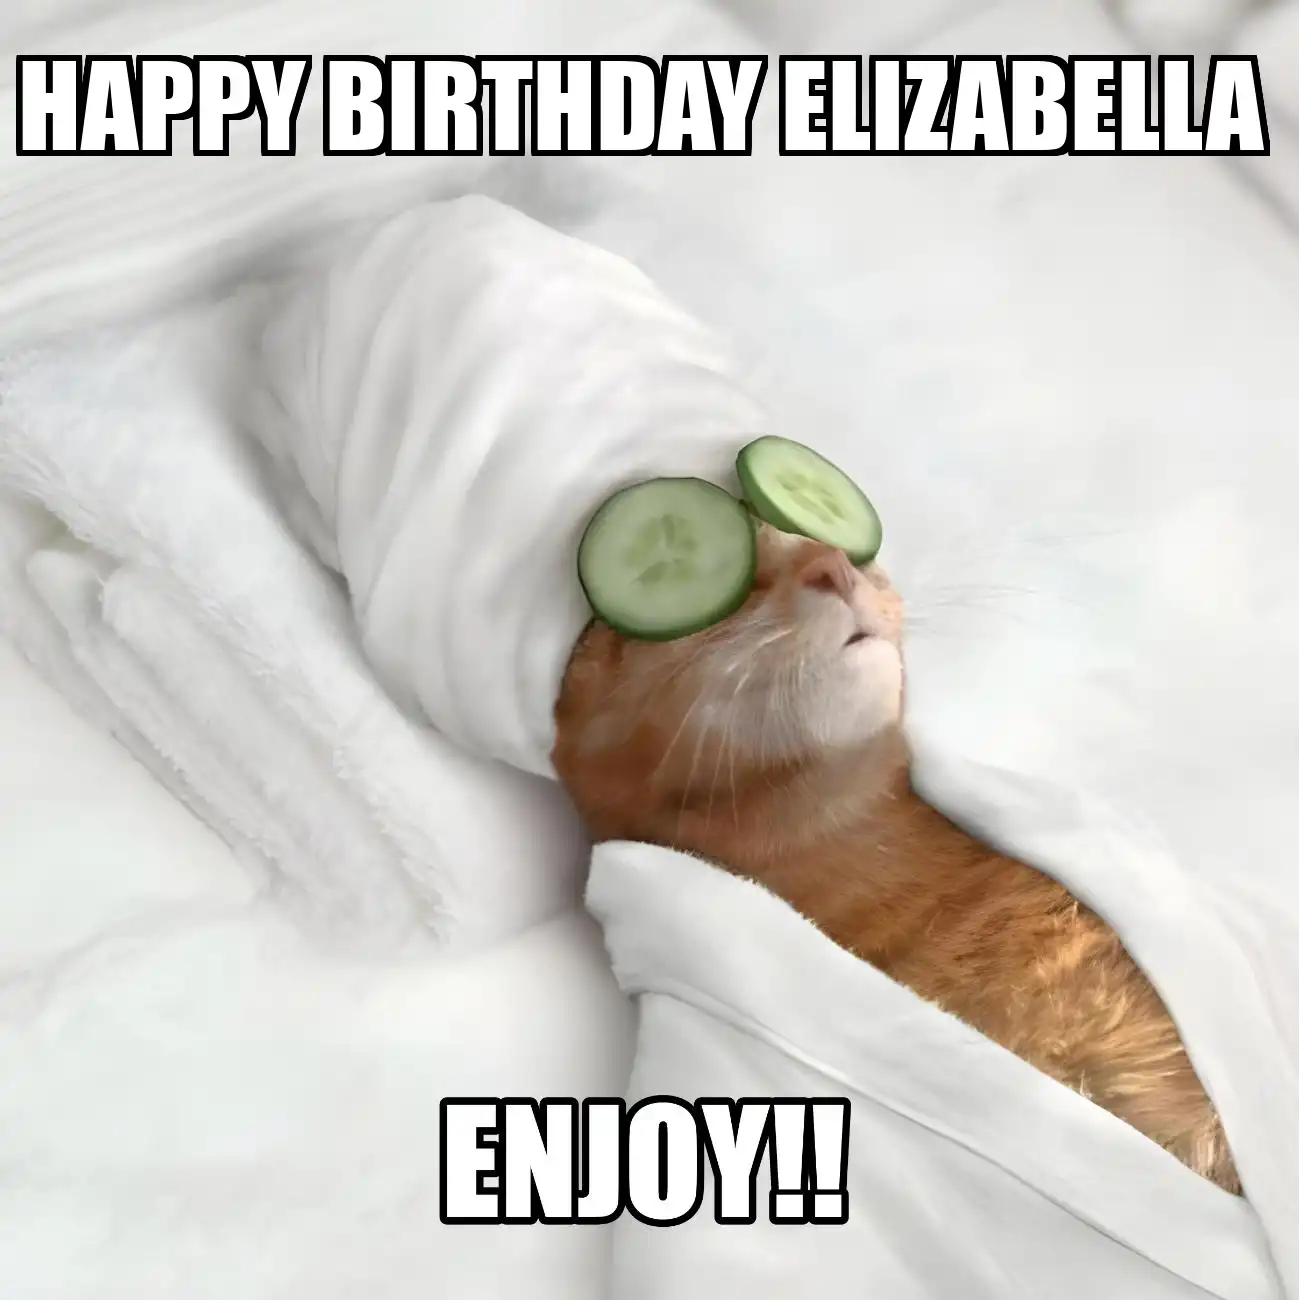 Happy Birthday Elizabella Enjoy Cat Meme